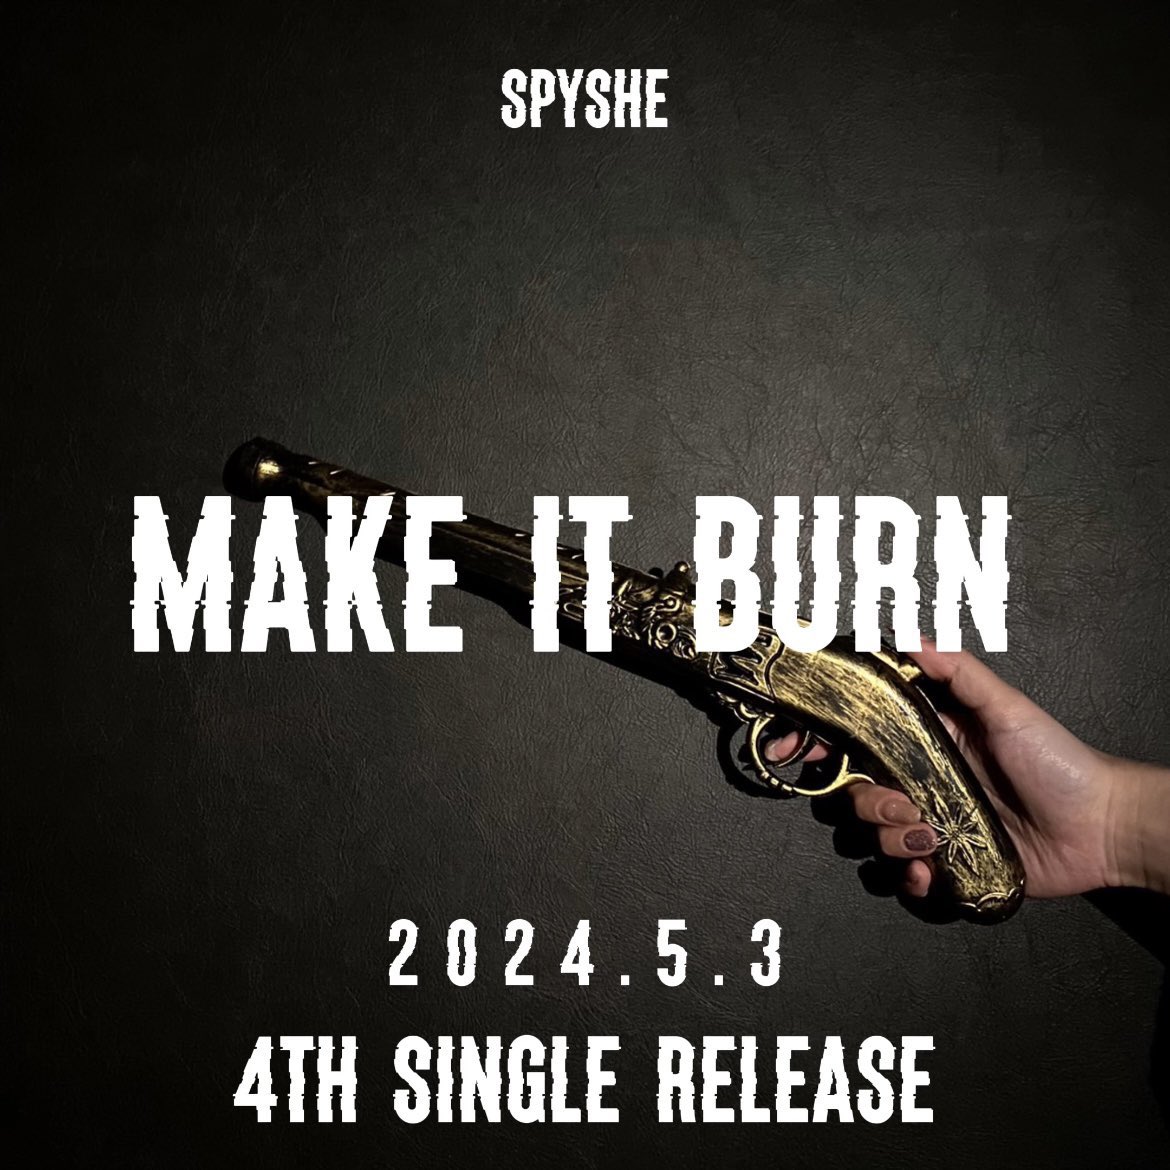 2024.5.3 4TH SINGLE RELEASE
PLUSWIN HALL OSAKA
'MAKE IT BURN'

YUME🐿ちゃん
@yume_spyshe
#yume #ユメ

@SPYSHE_official
#spyshe #スパイシー
#makeitburn